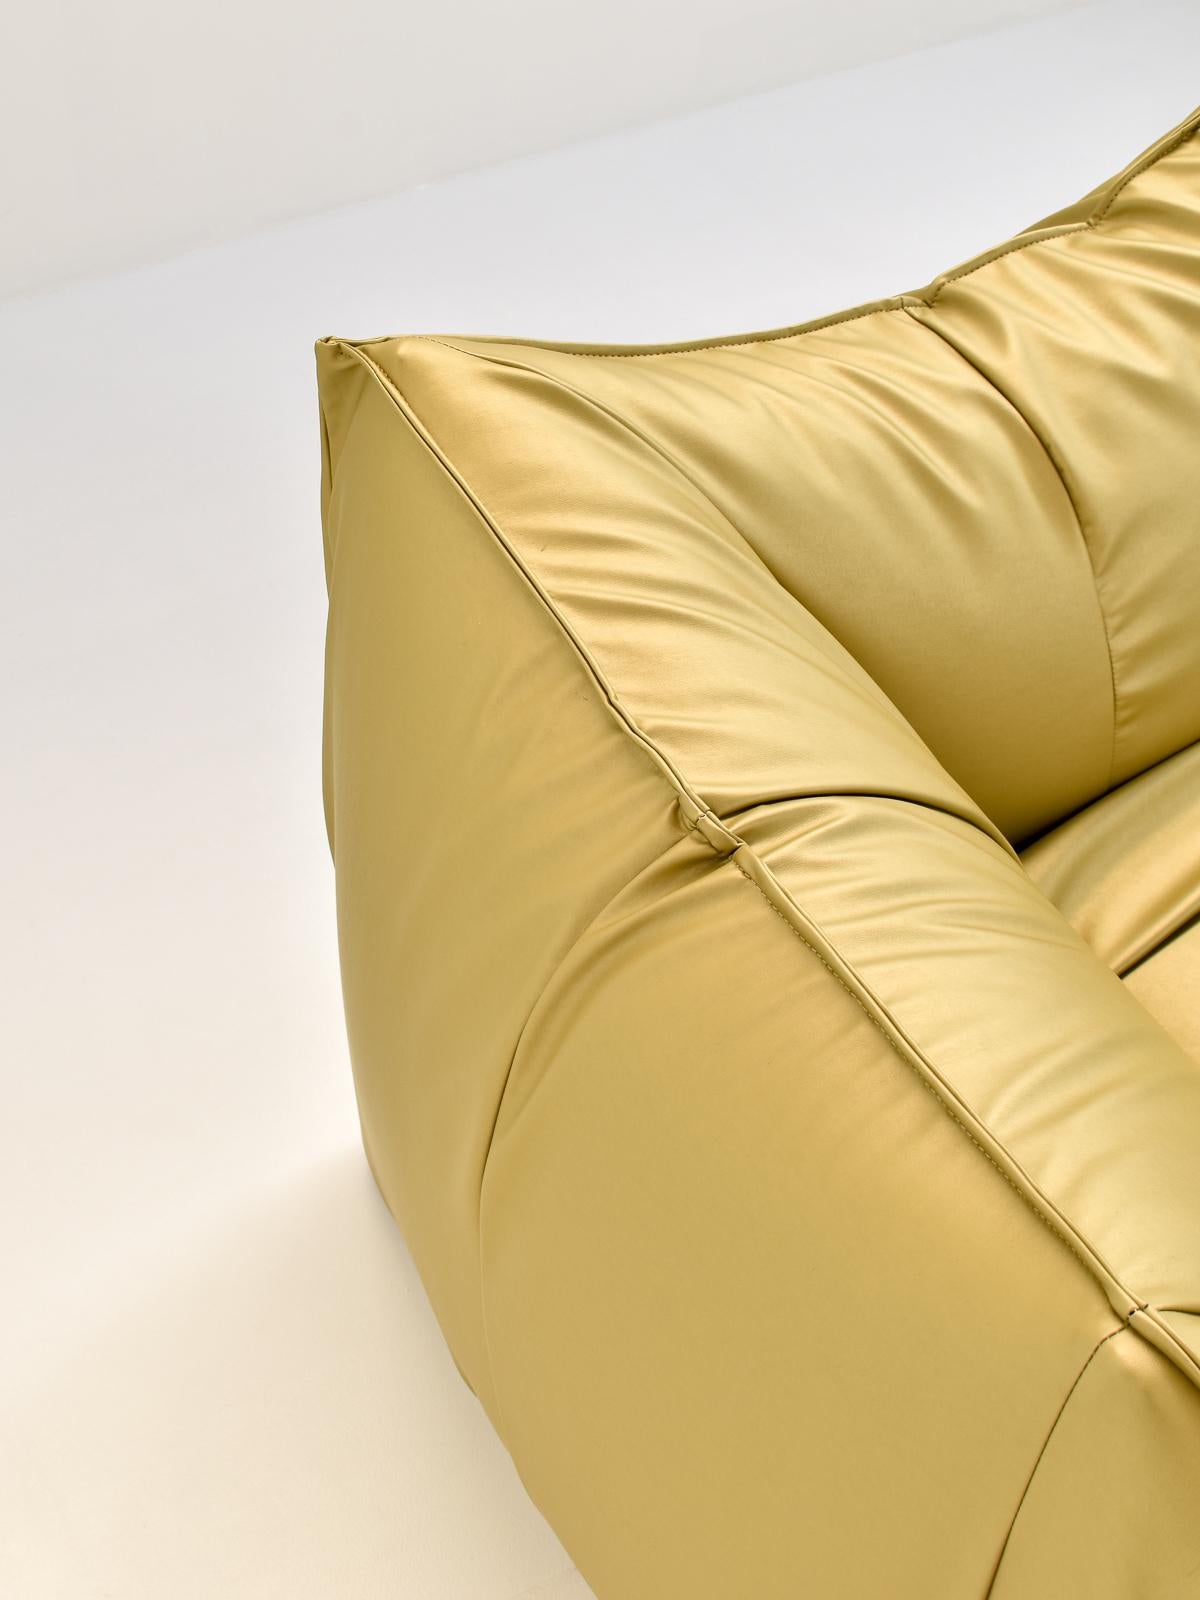 Golden Le Bambole Sofa by Mario Bellini for B&B Italia 2